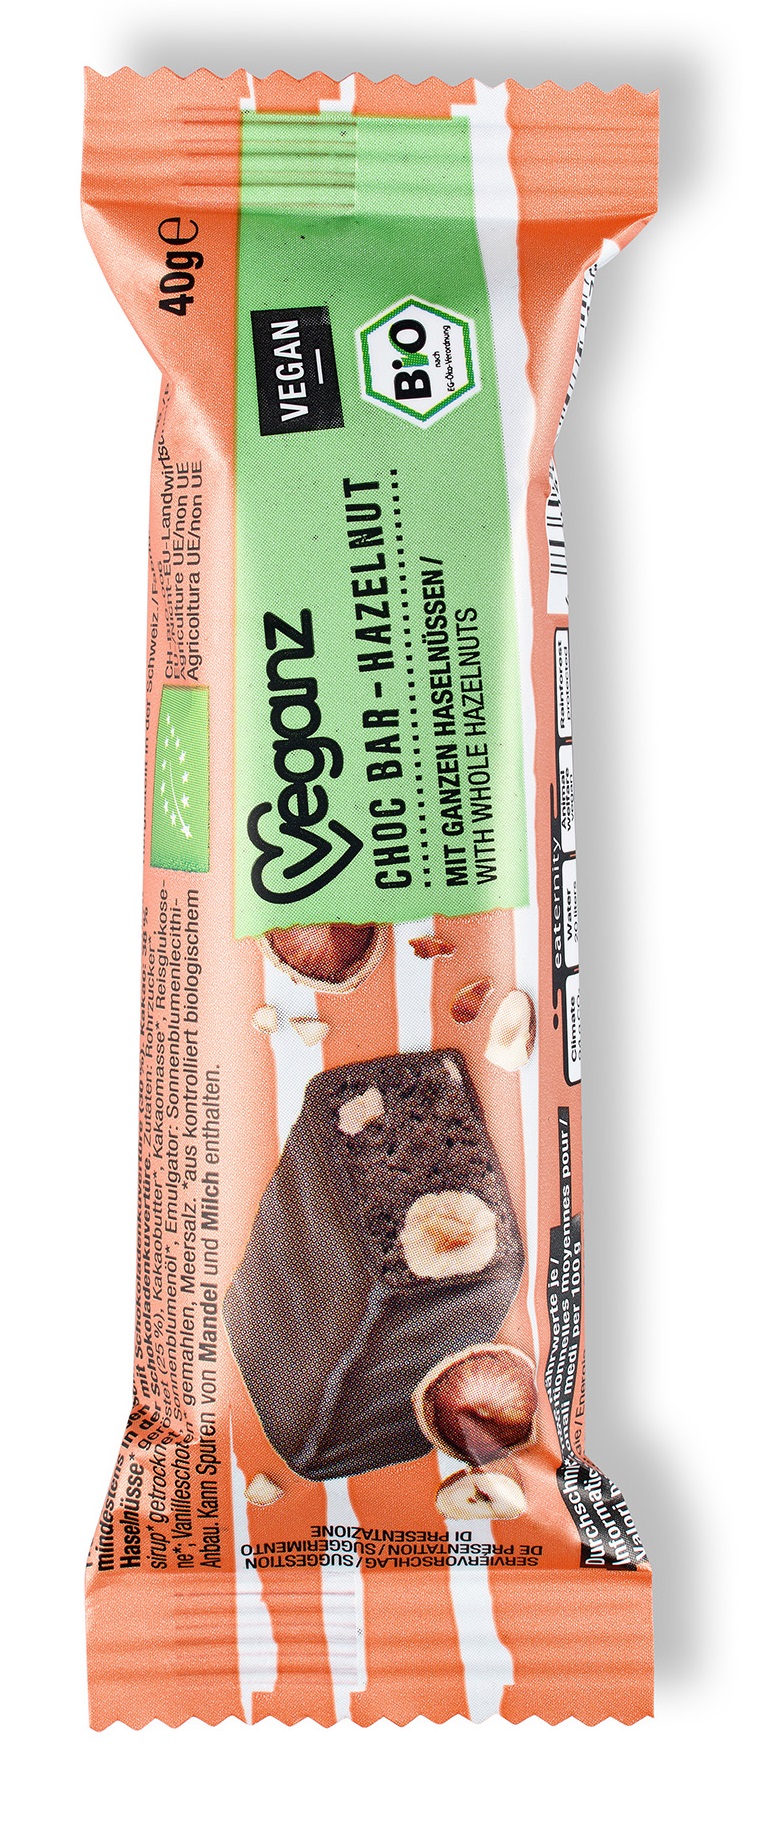 Veganz Bio Chocolate Bar Haselnuss (3 Stück) - 40g